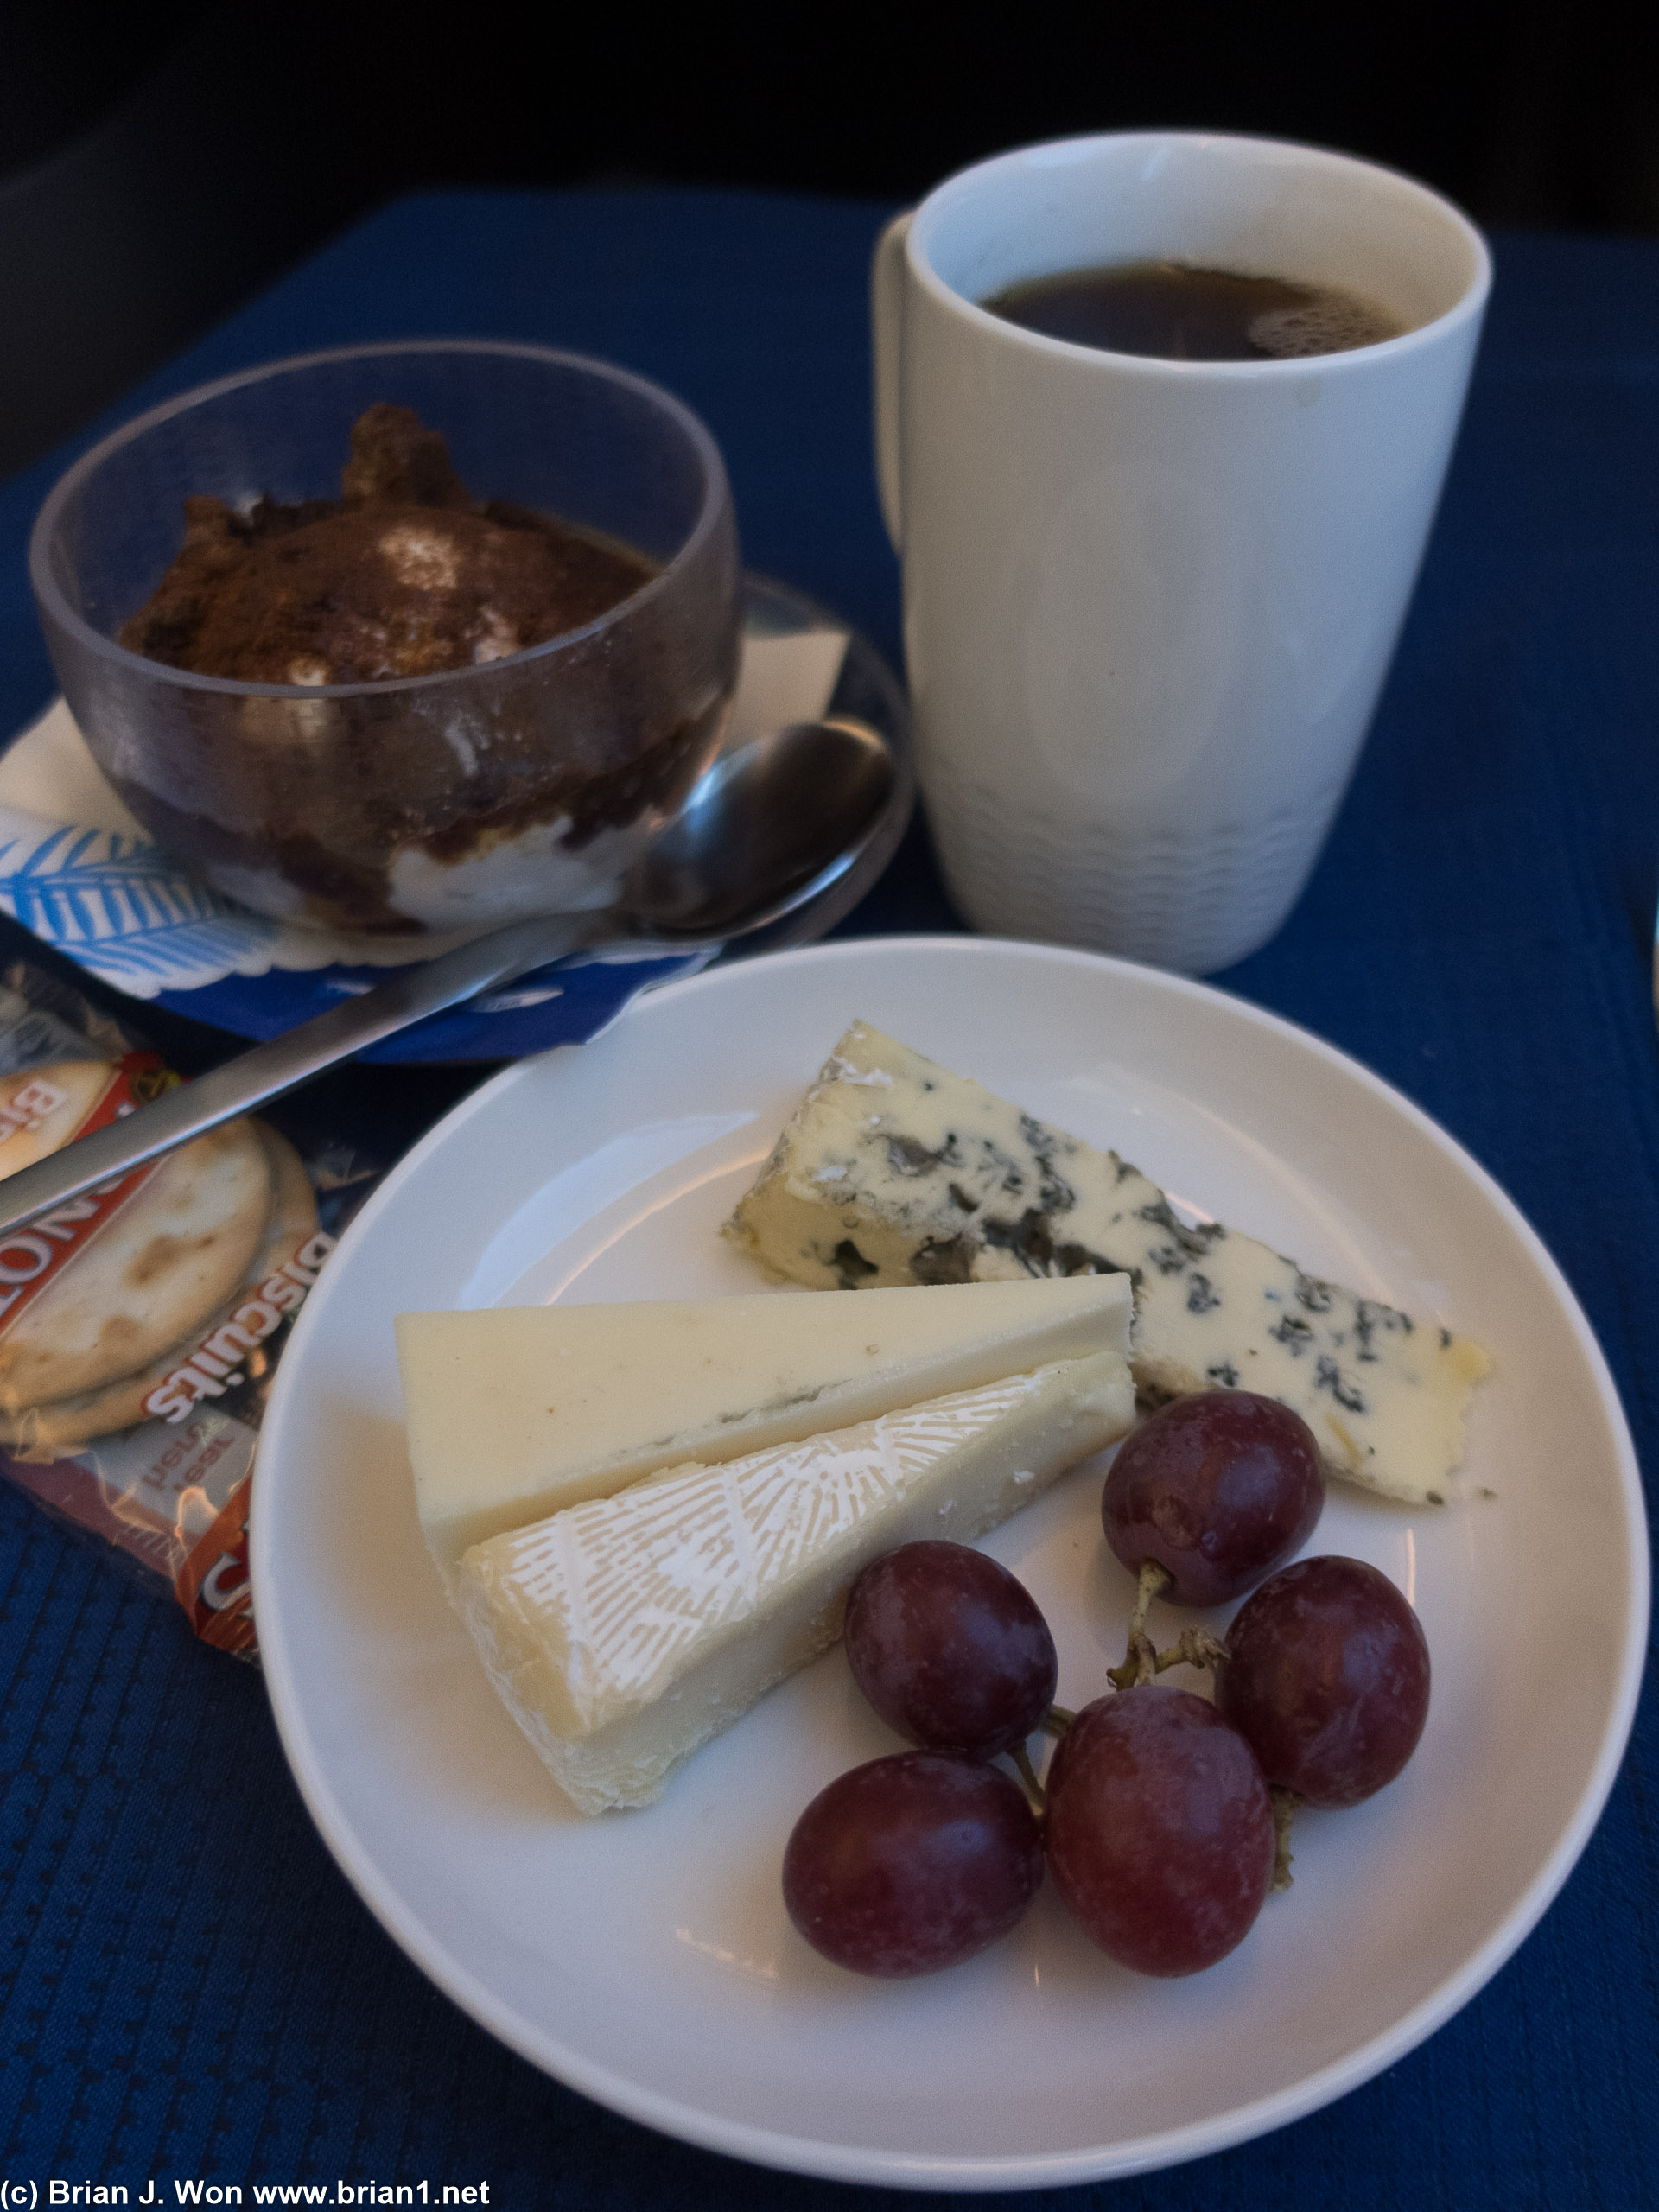 Cheese plate, pre-plated ice cream sundae, and more hot tea.